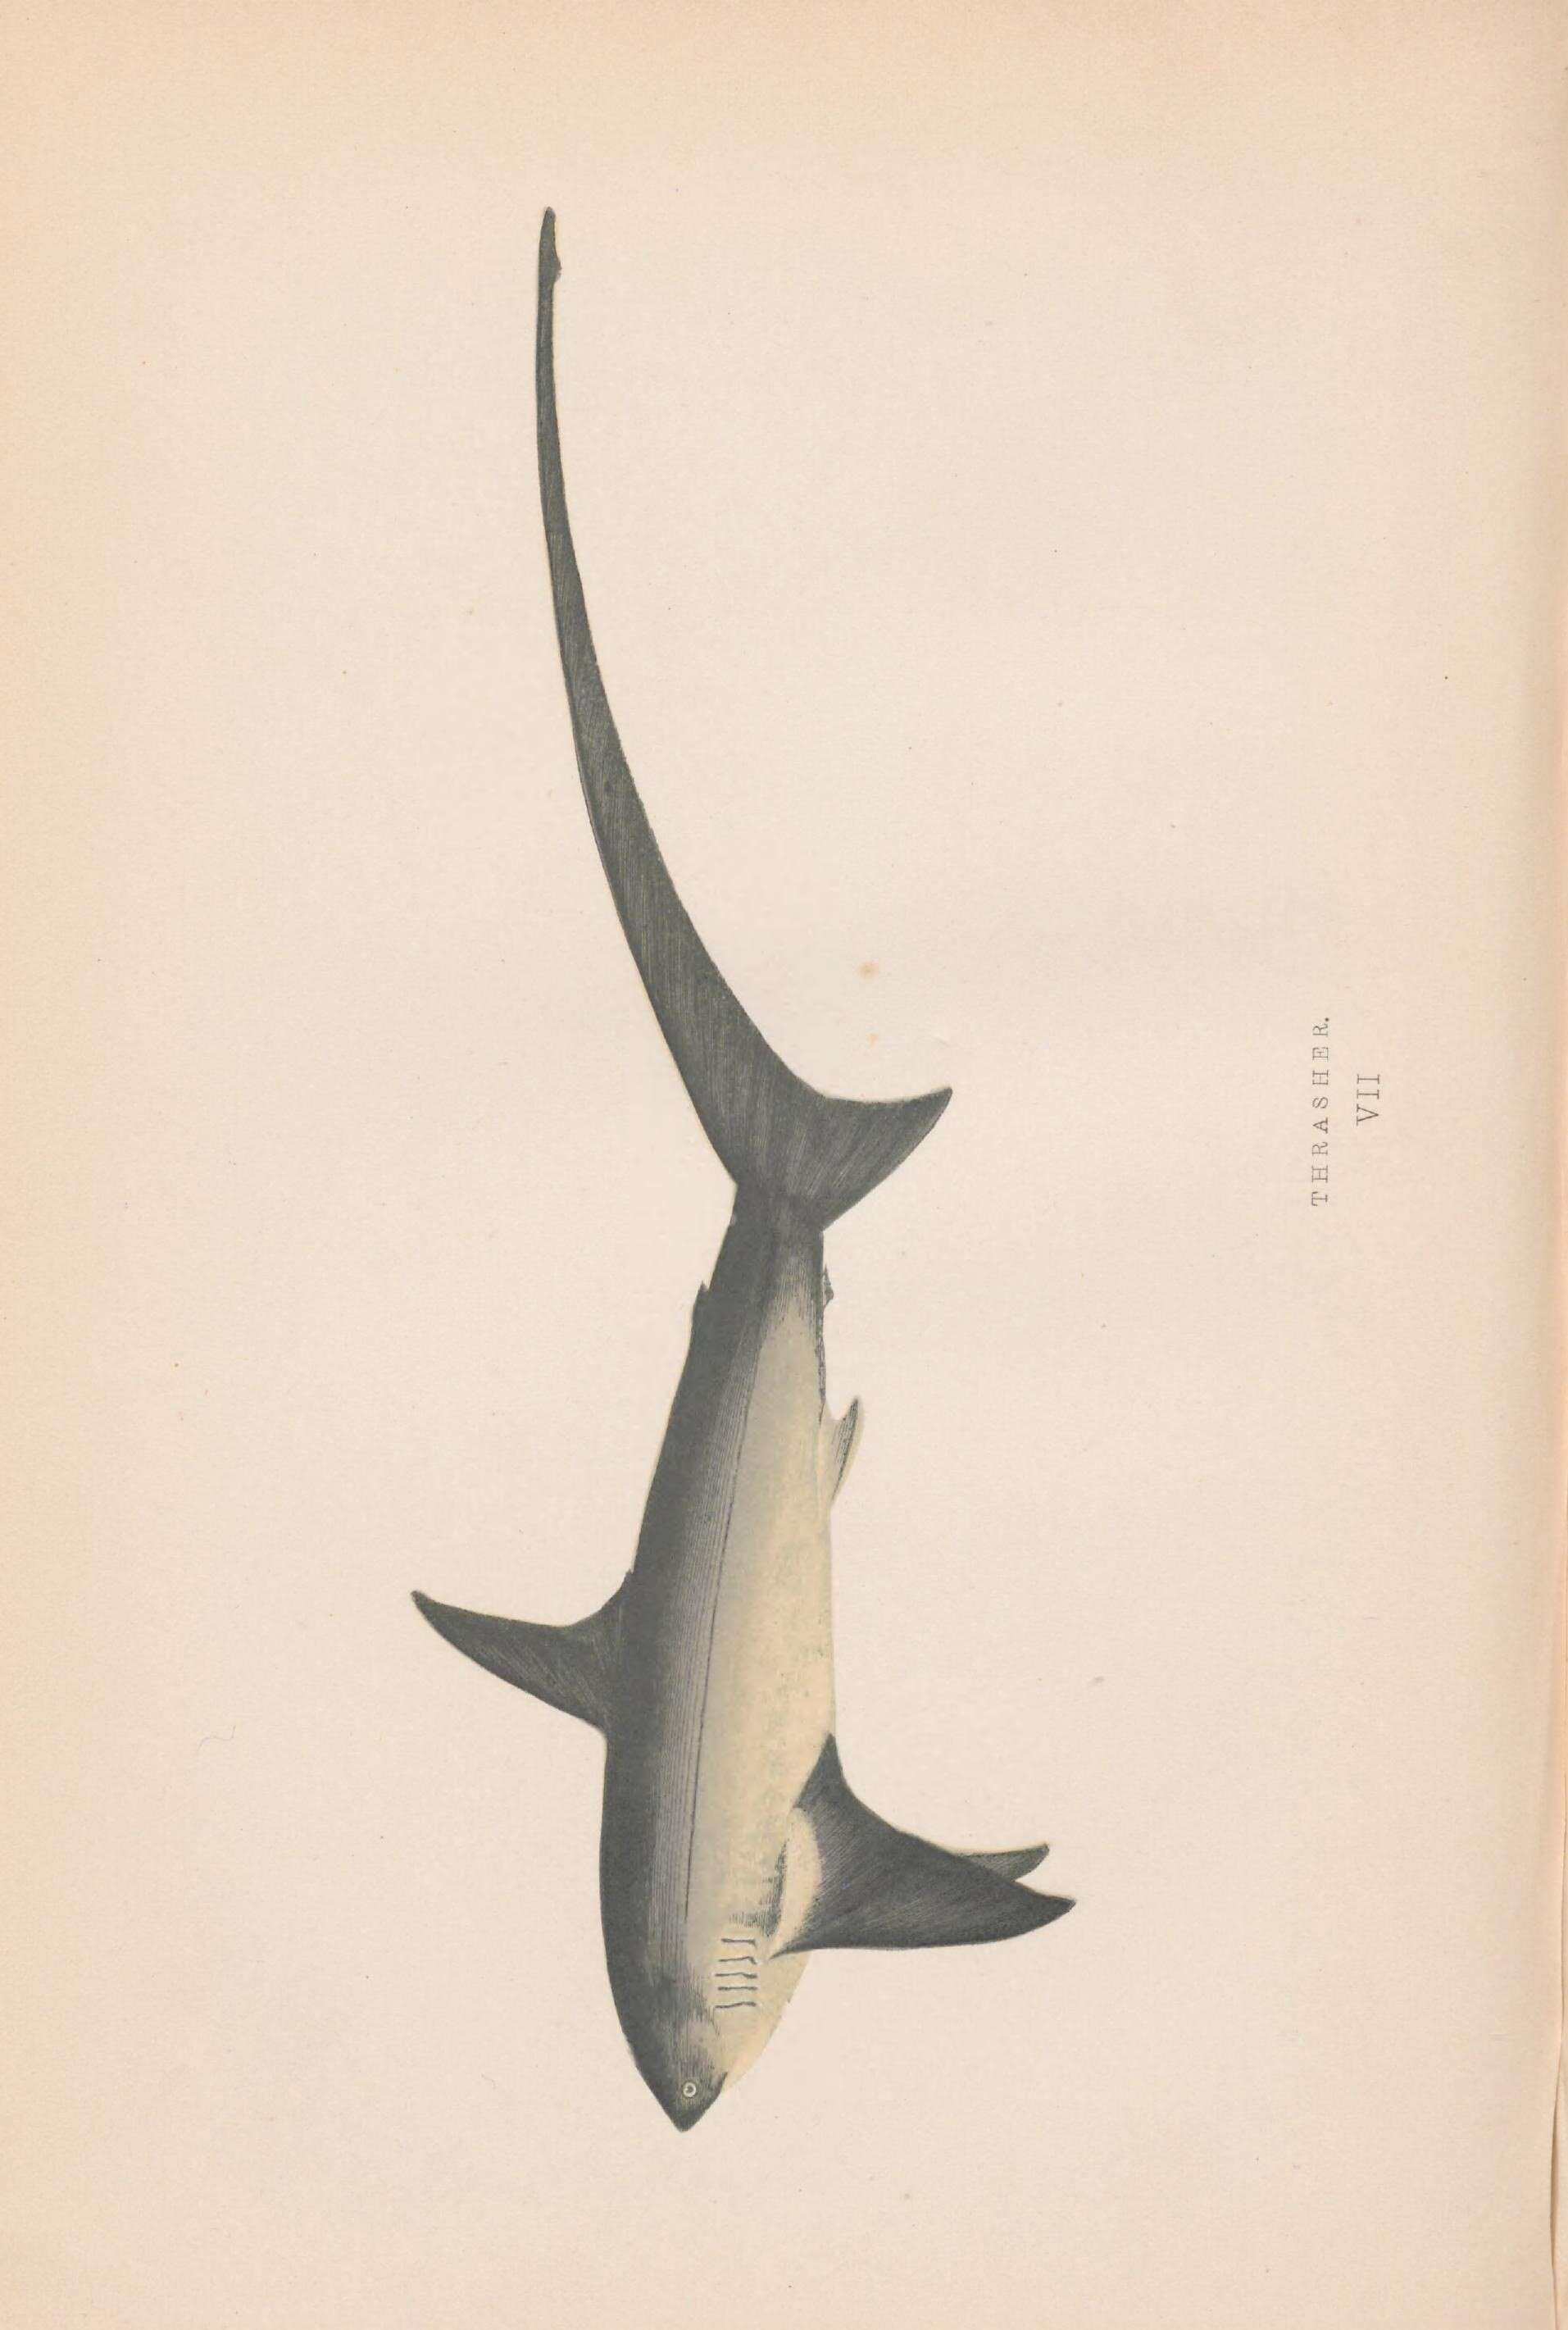 Image of thresher sharks